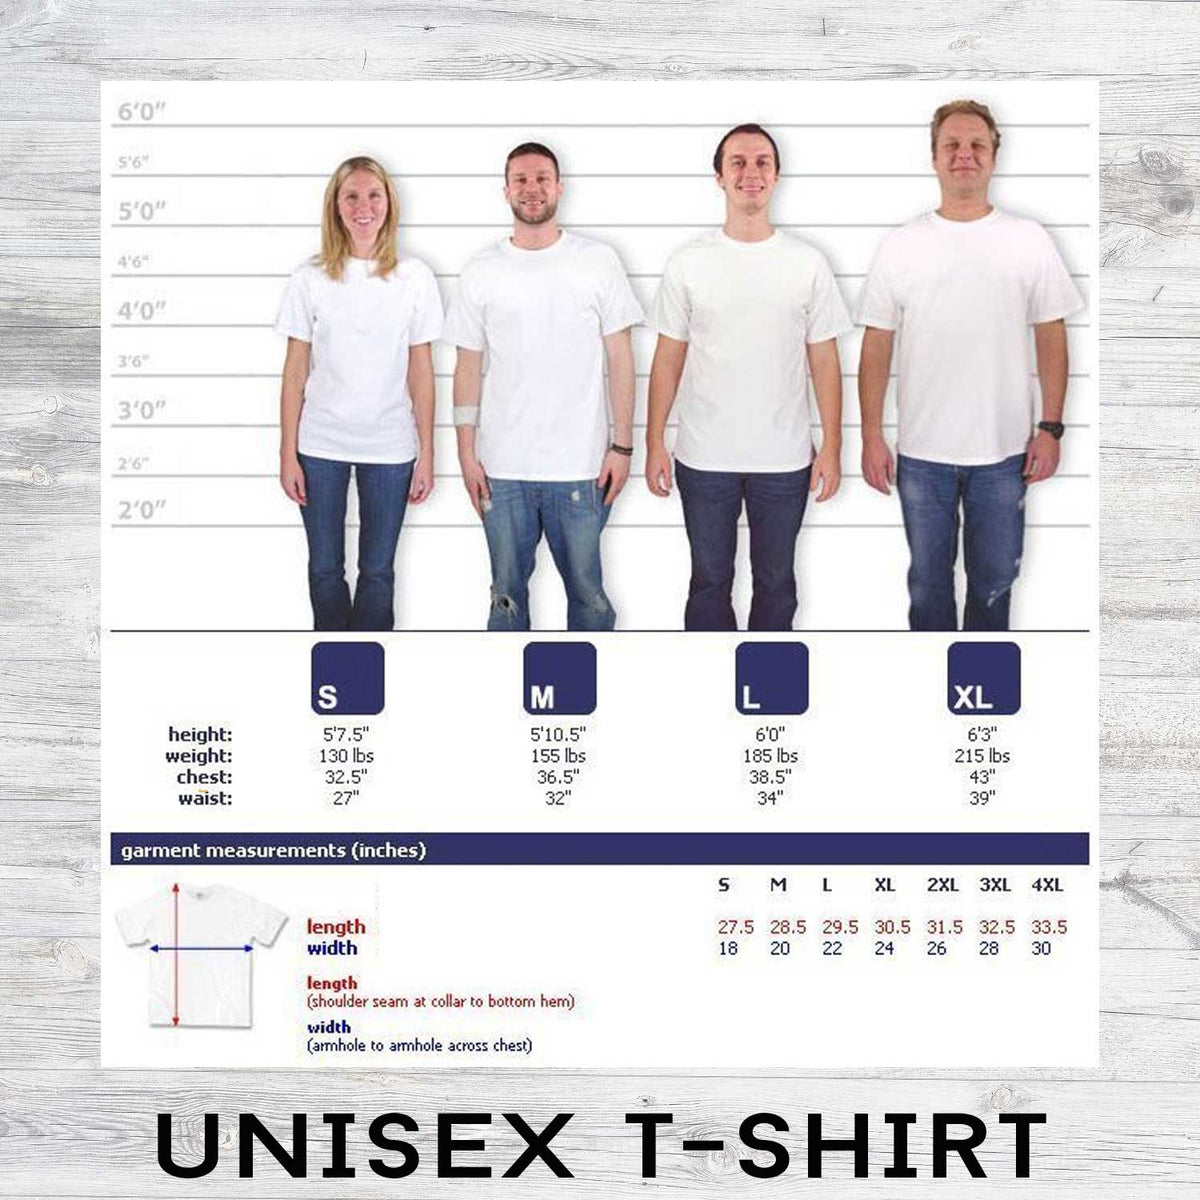 UNAGI meaning white t-shirt